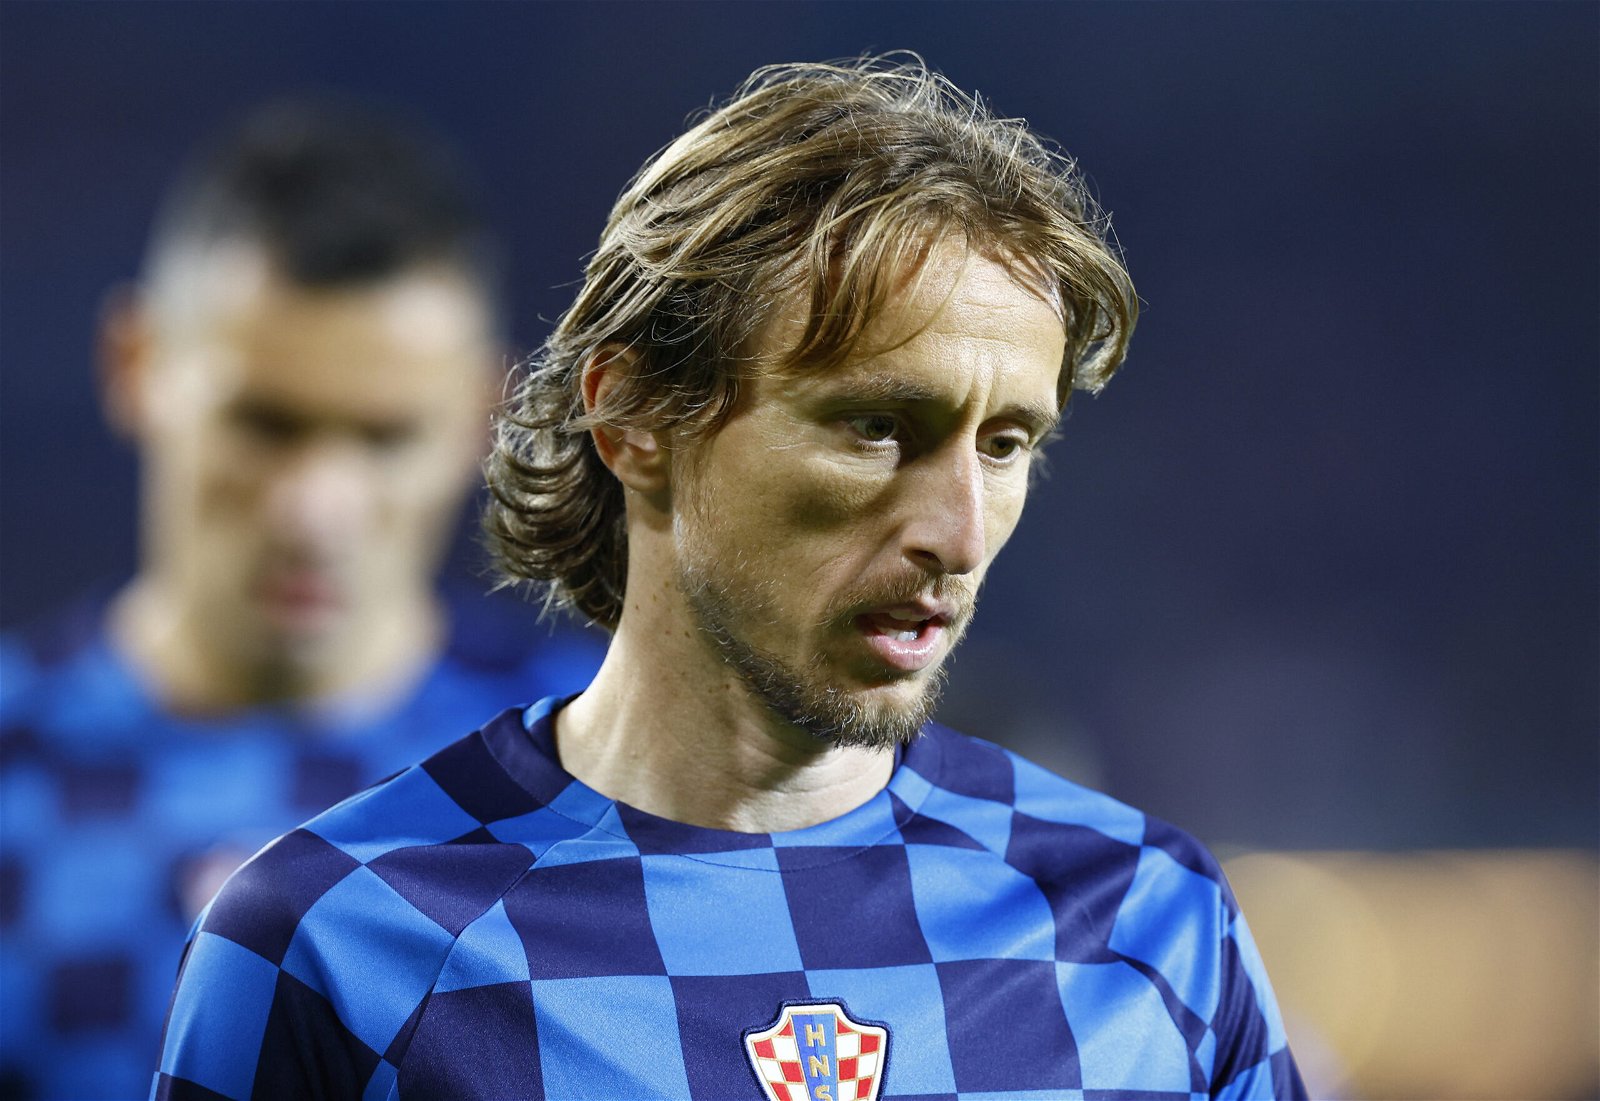 Croatia's best player in the World Cup qualifier Luka Modric